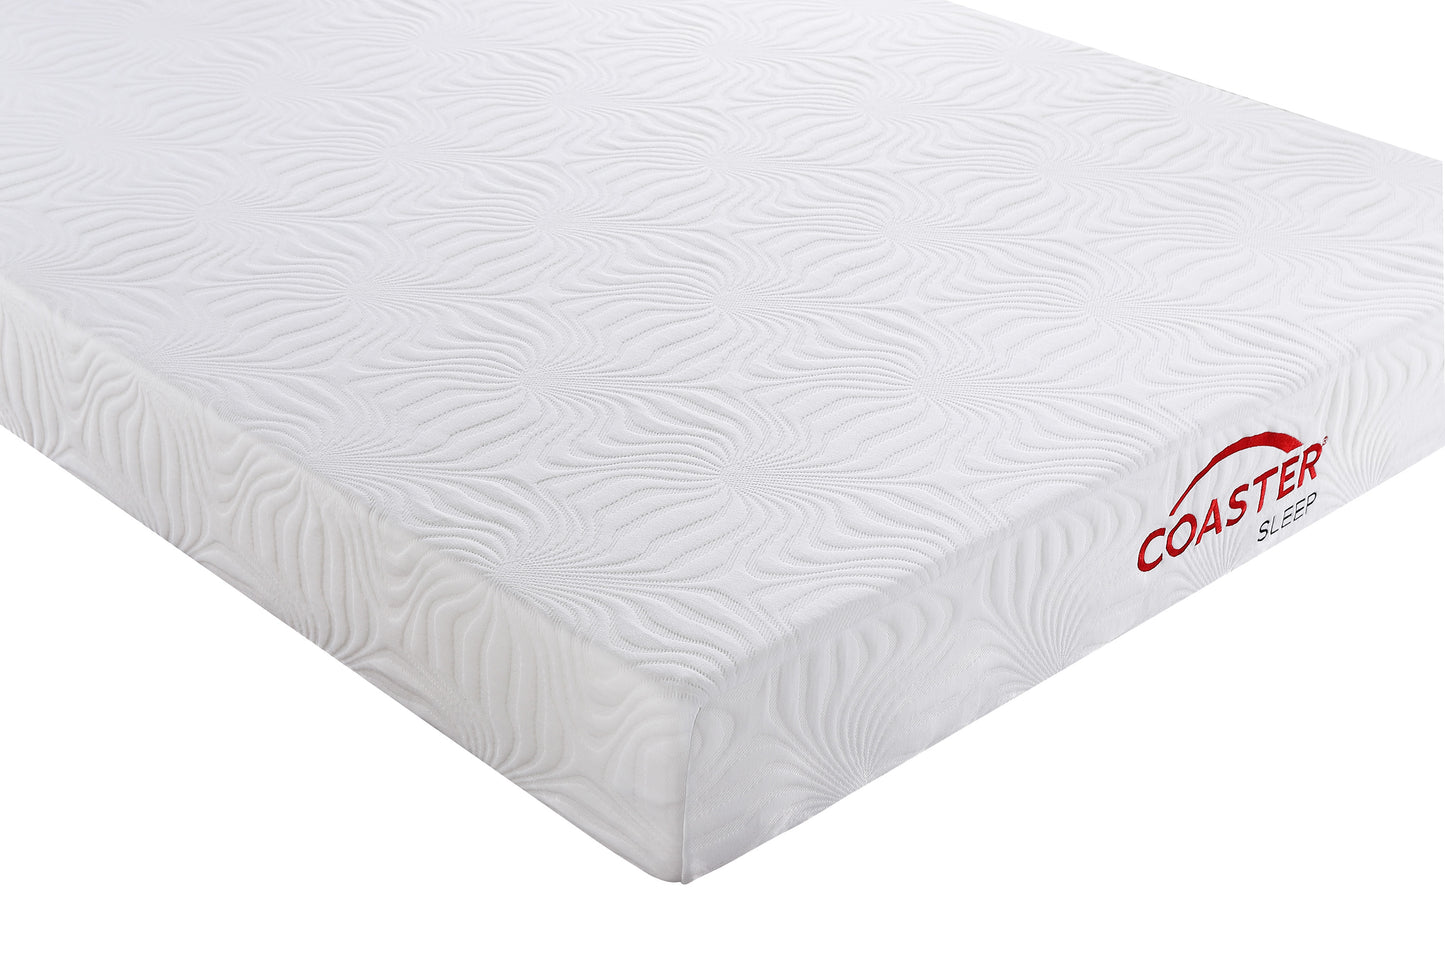 8" full memory foam mattress